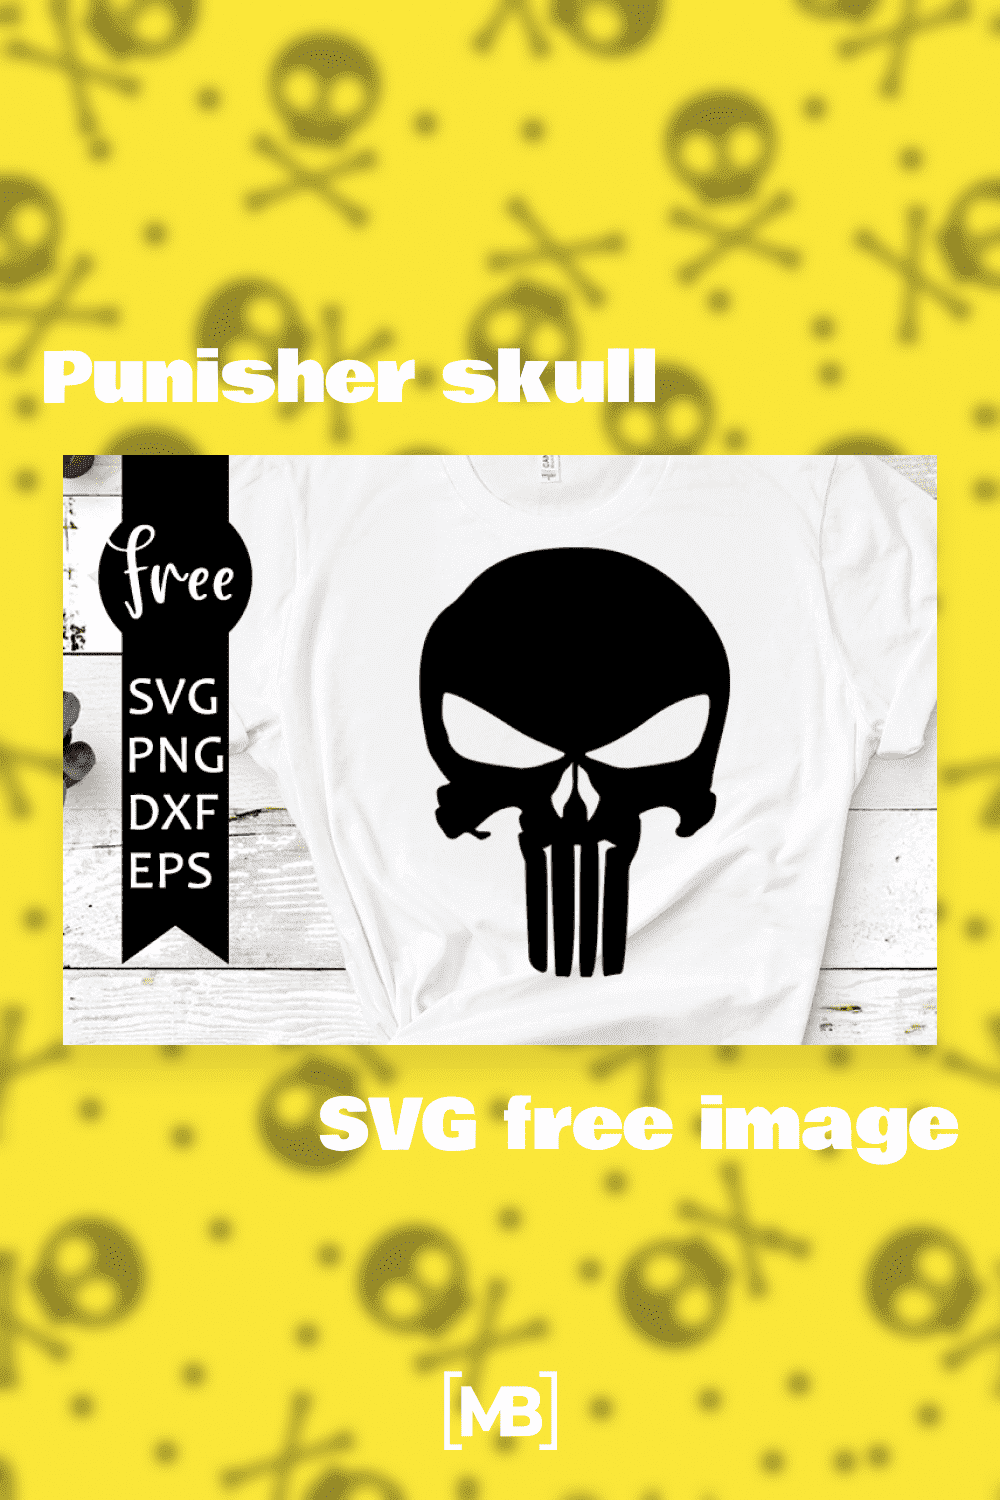 Punisher skull svg free image.